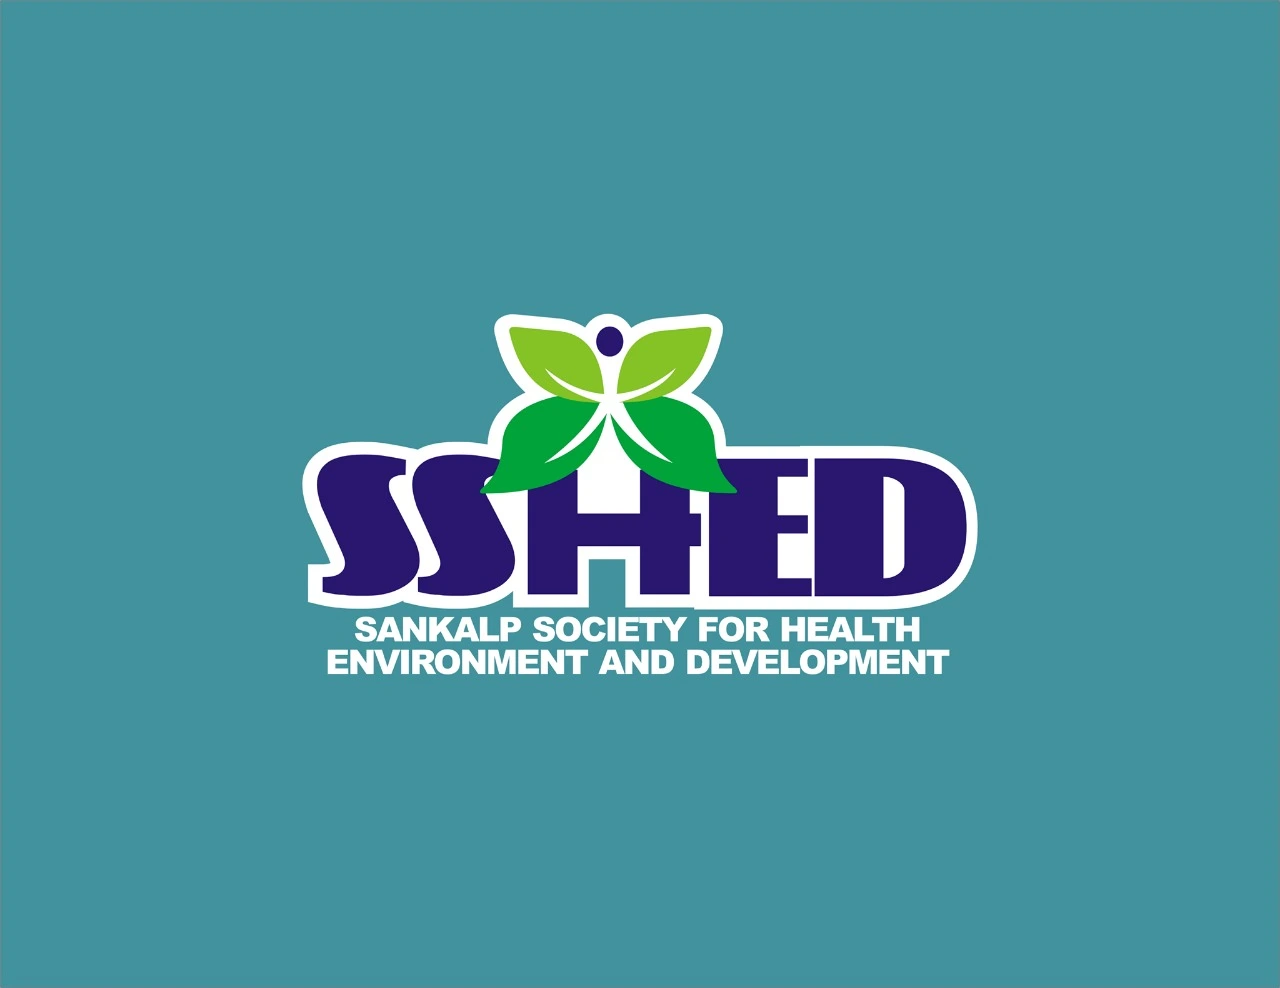 SANKALP SOCIETY FOR HEALTH ENVIRONMENT AND DEVELOPMENT